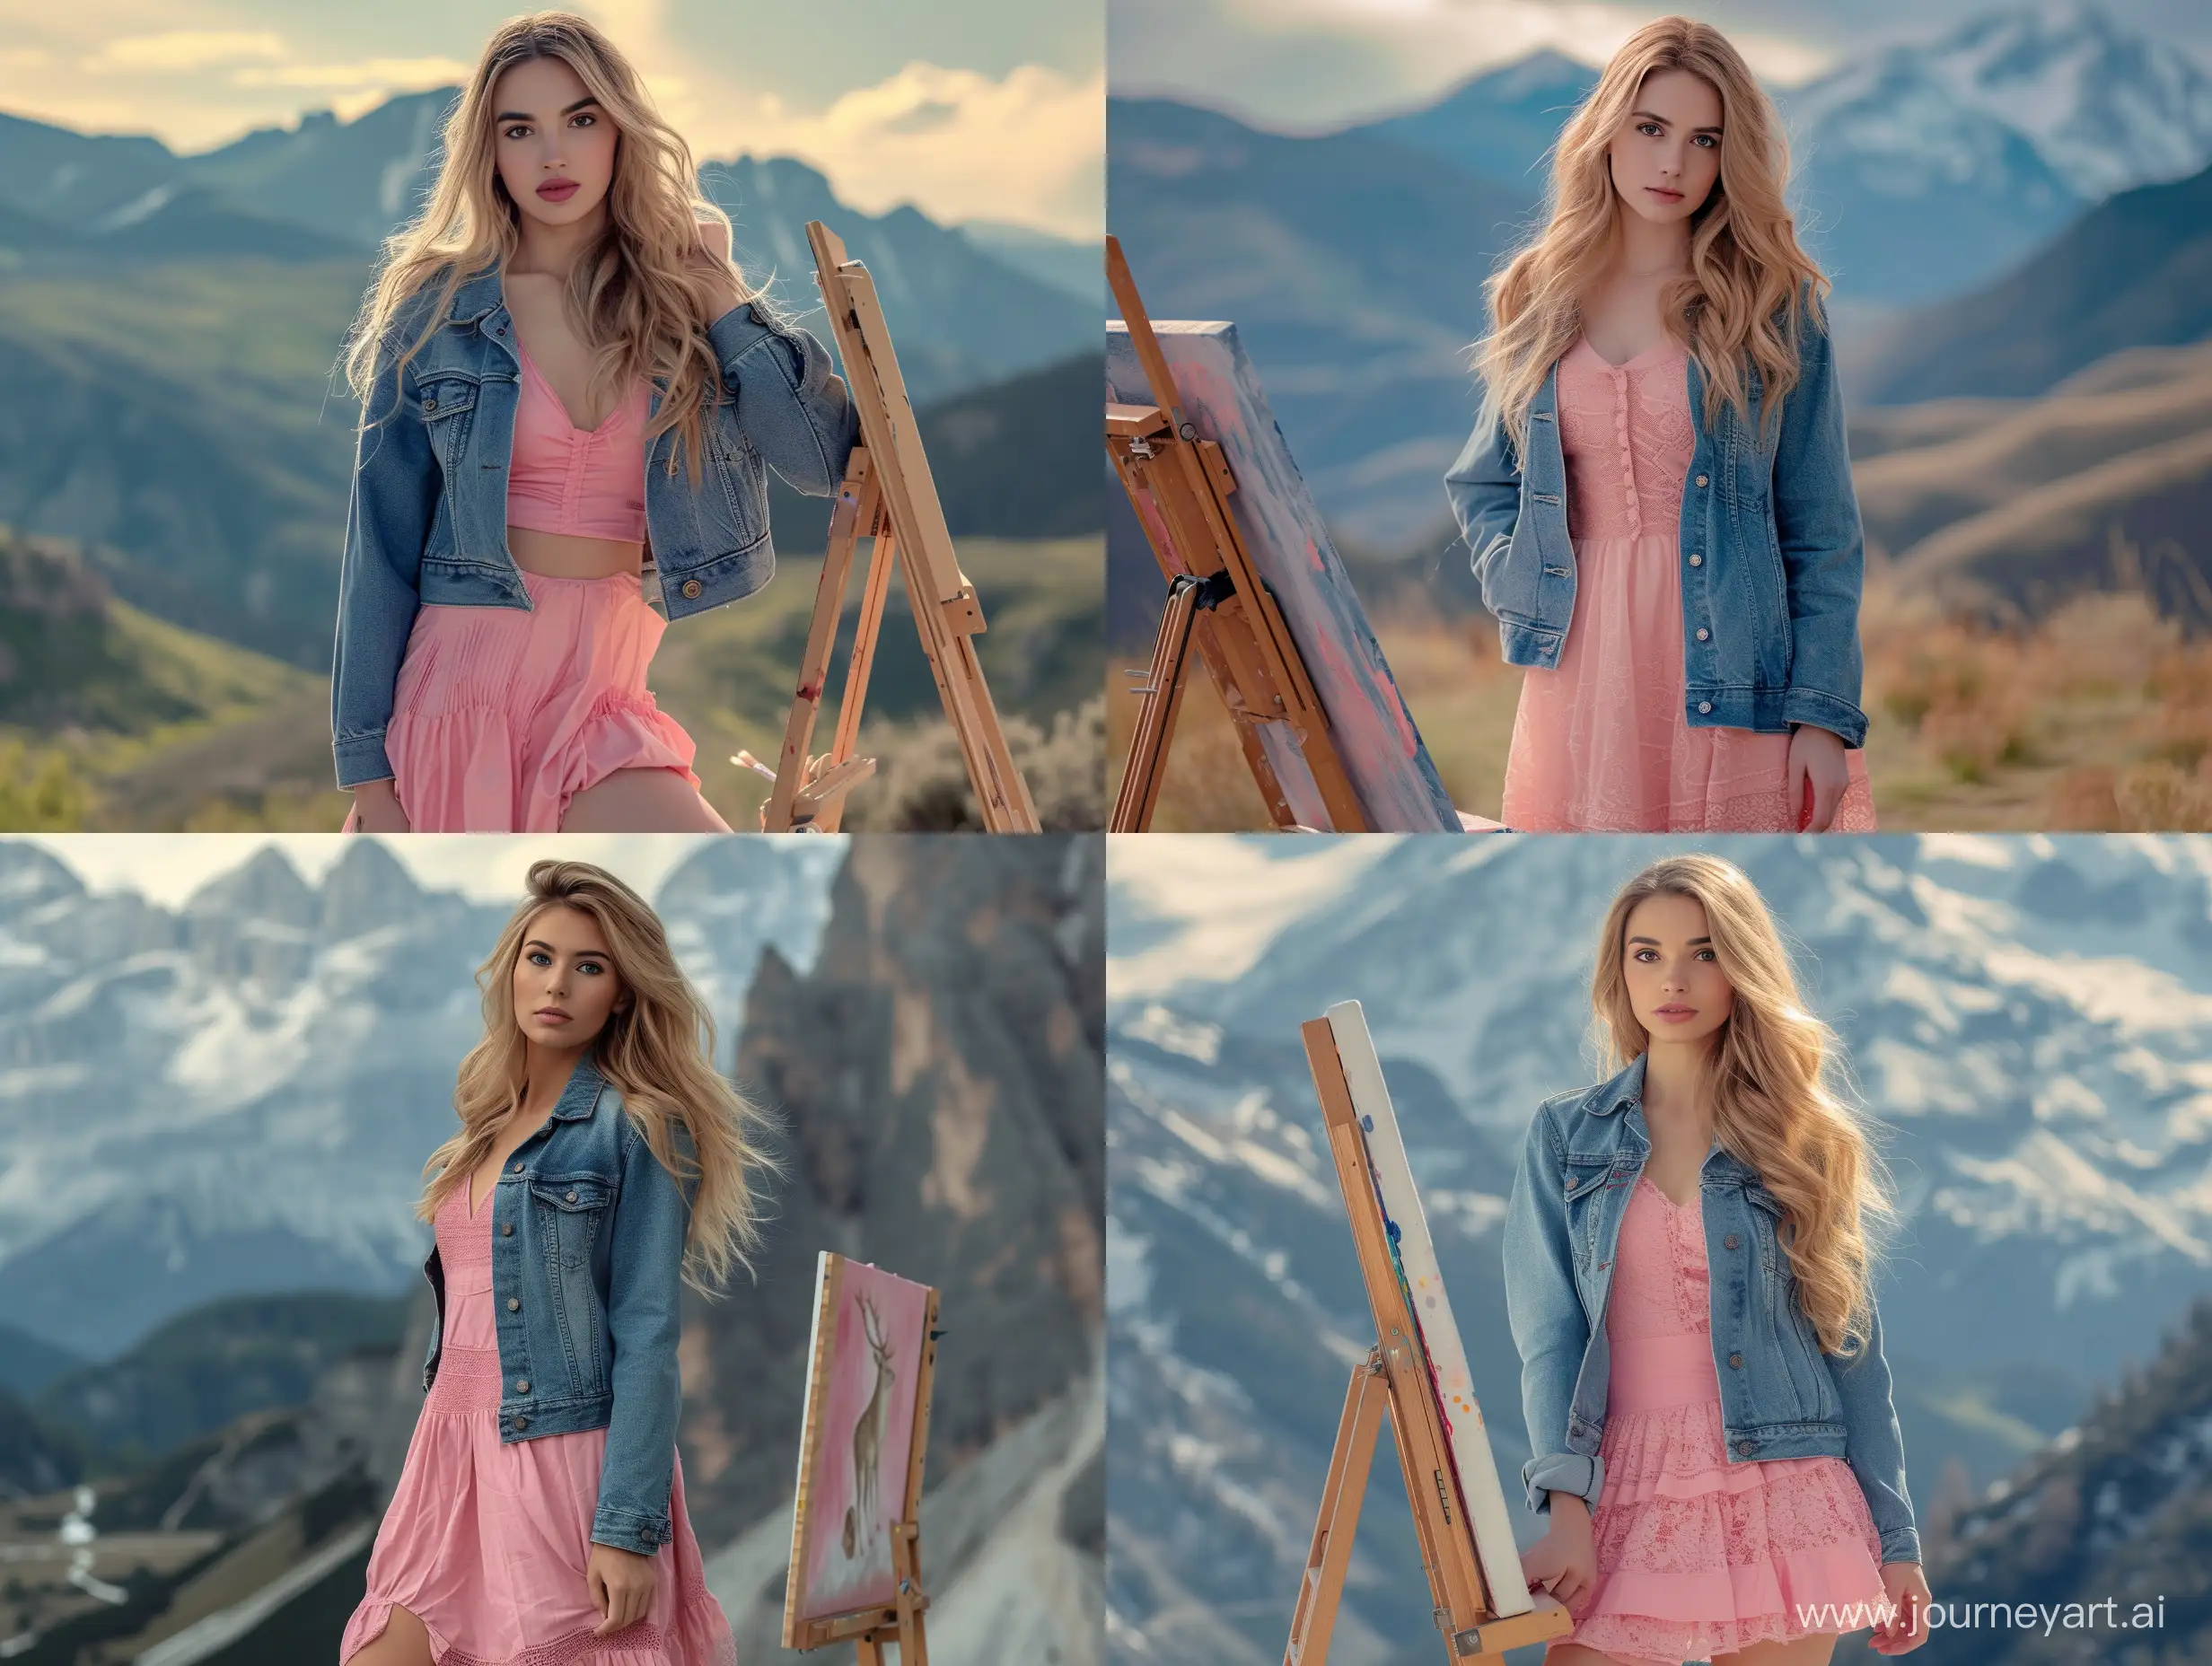 Elegant-35YearOld-Female-Artist-in-Pink-Dress-Cinematic-Mountain-Photo-Shoot